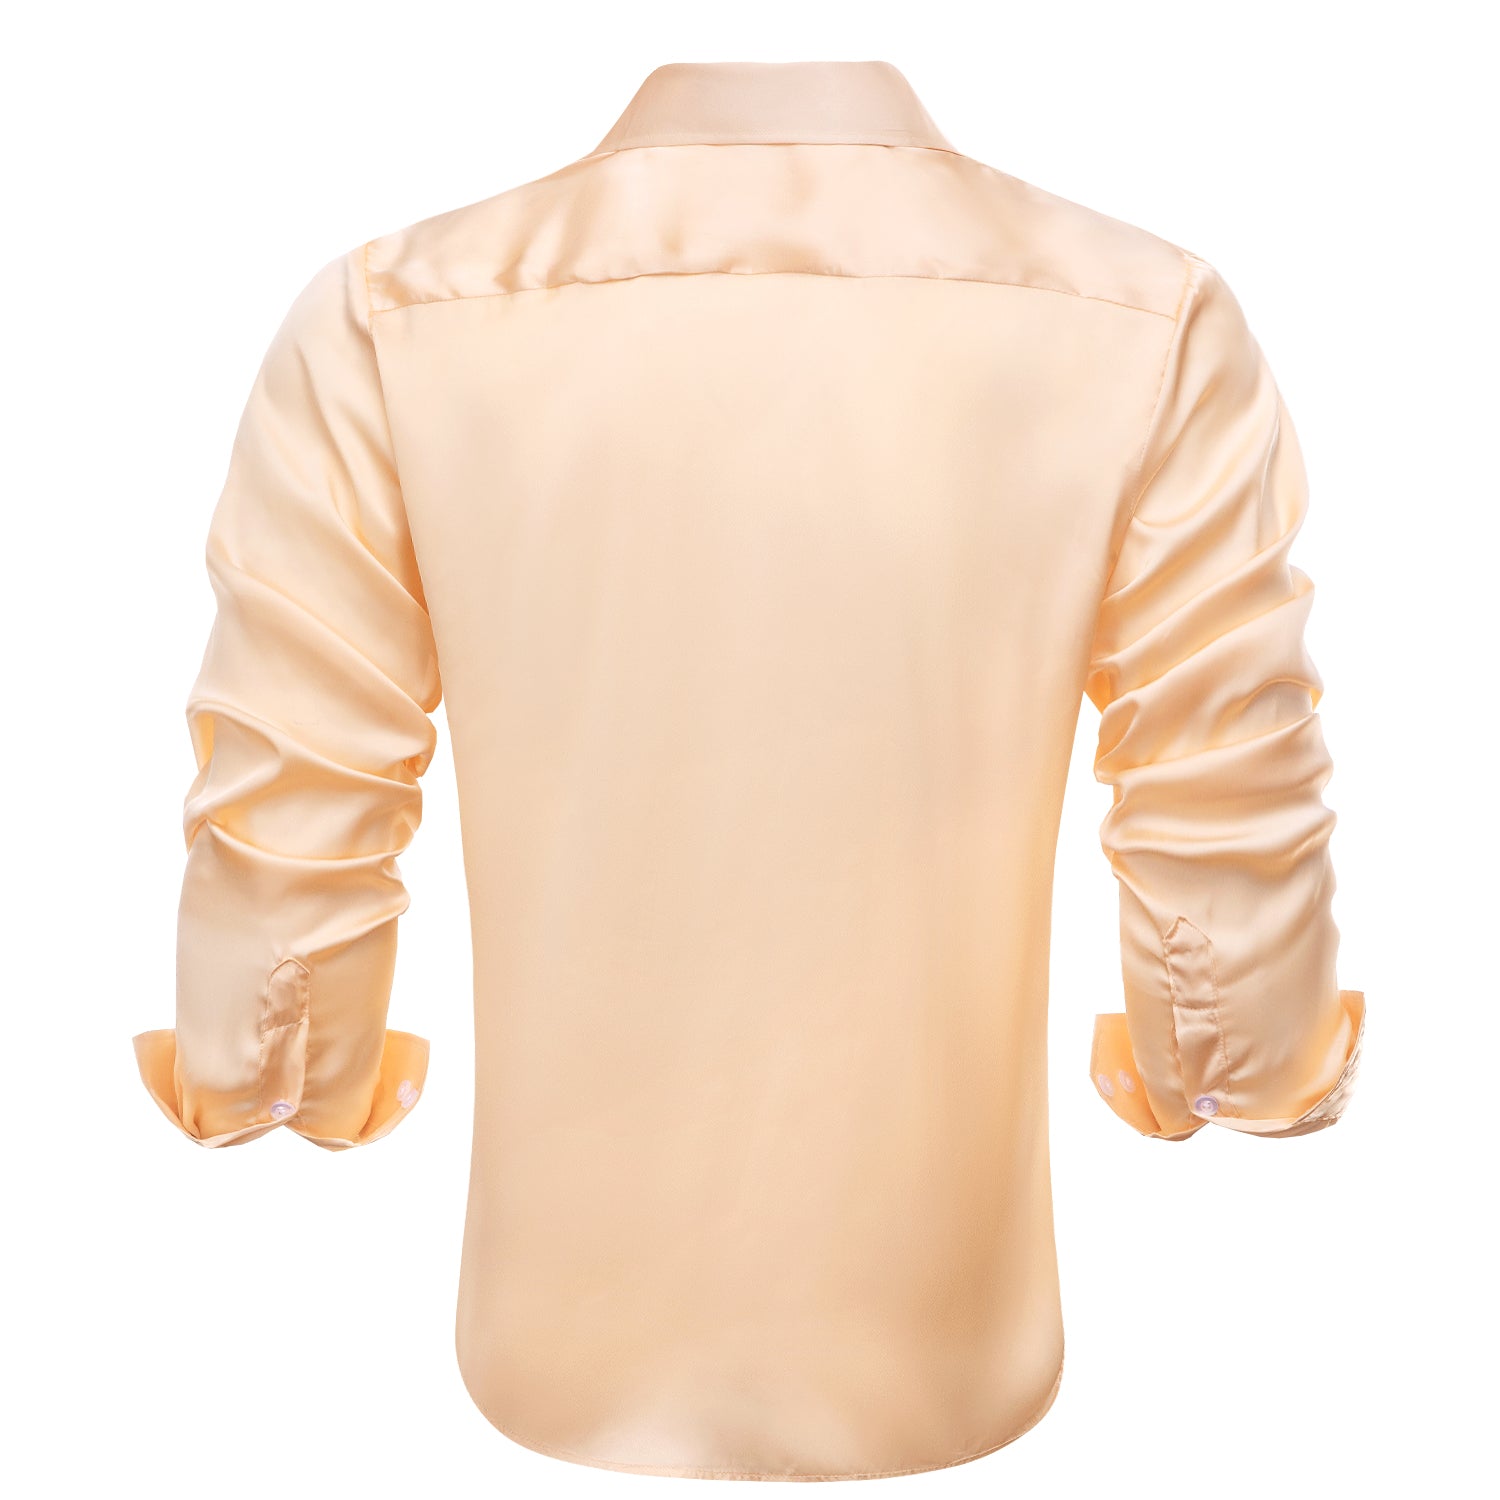 Mist Orange Solid Satin Chiffon Non-stretch Men's Long Sleeve Shirt